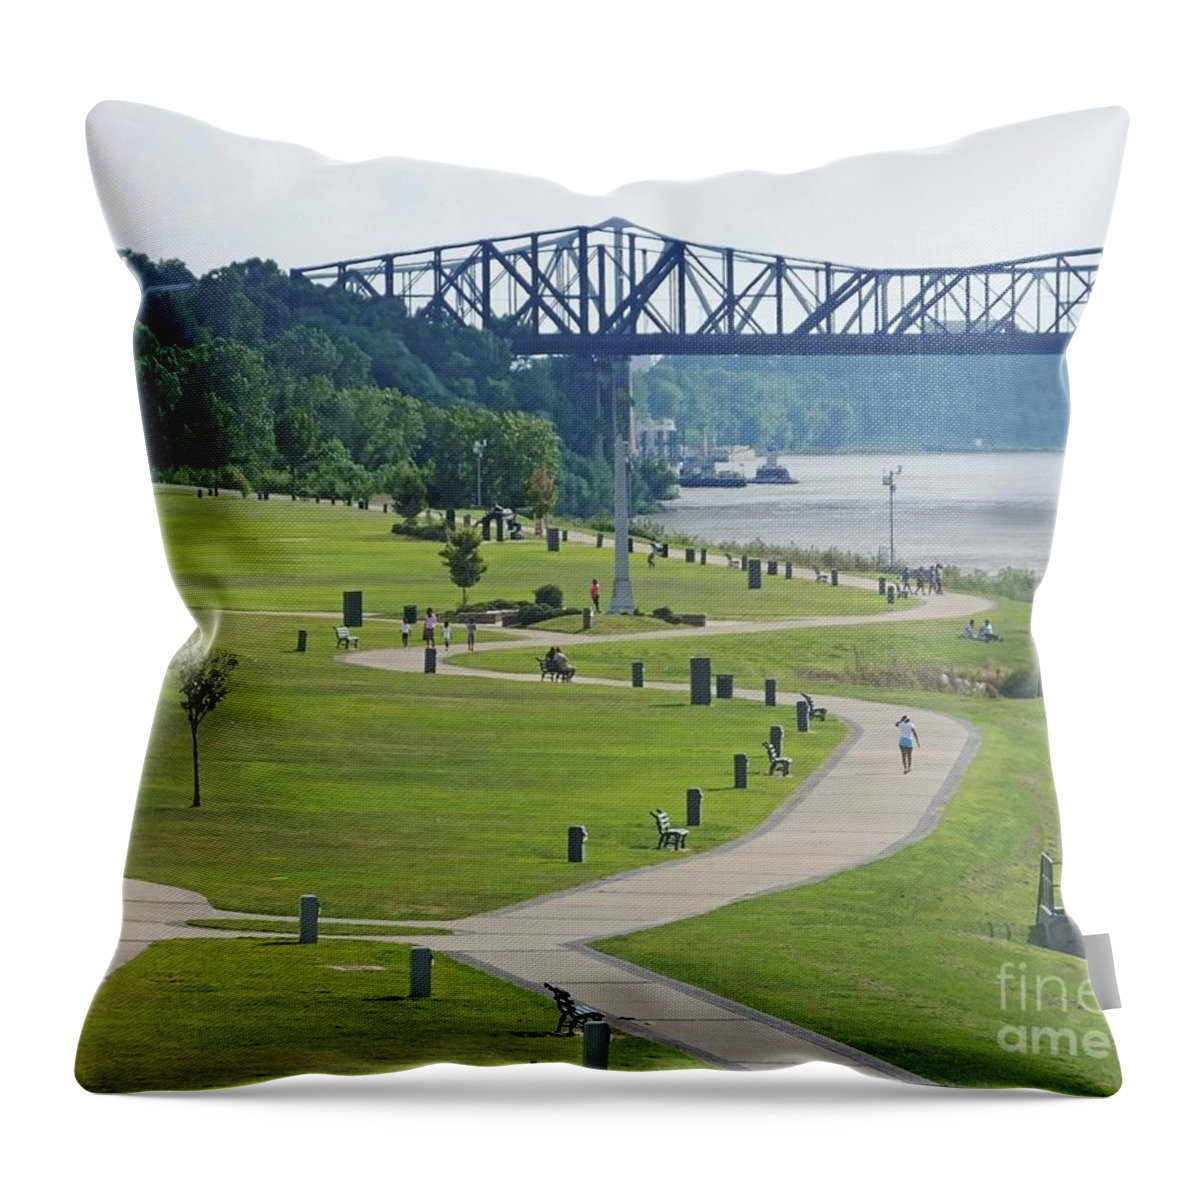 River Throw Pillow featuring the photograph Tom Lee Park Memphis Riverfront by Lizi Beard-Ward